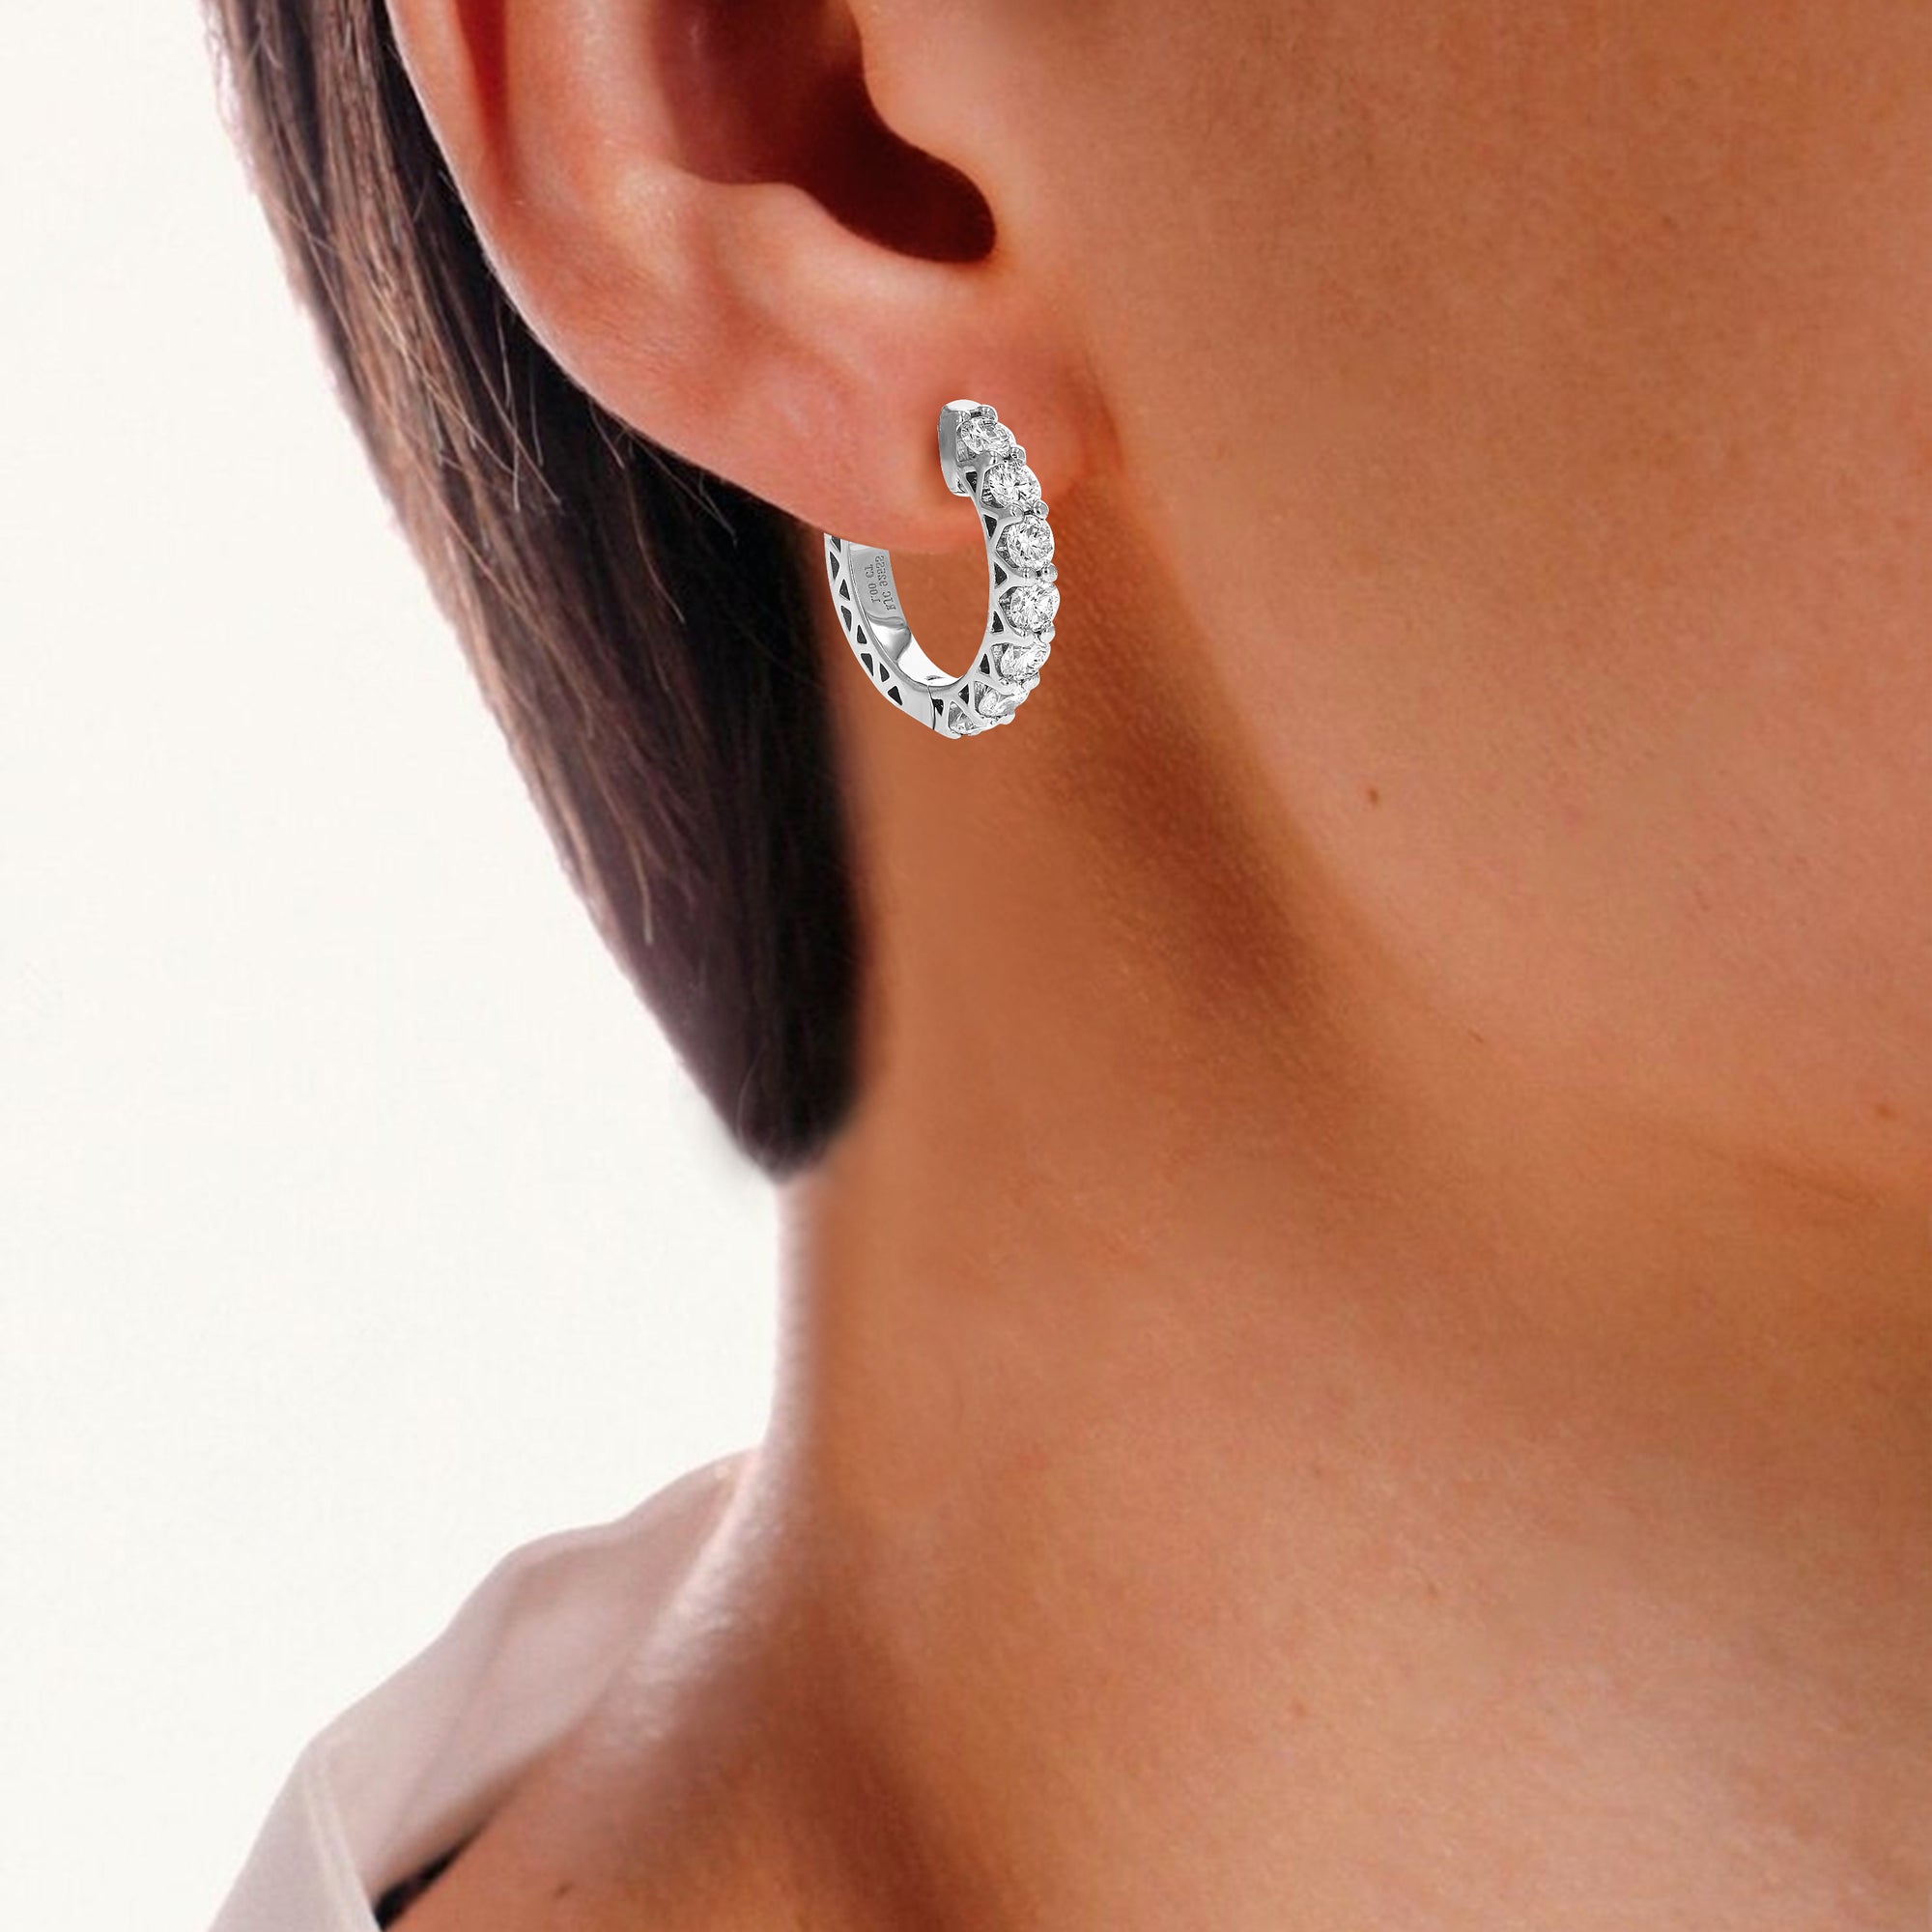 1 cttw Diamond Hoop Earrings for Women, Round Lab Grown Diamond Earrings in .925 Sterling Silver, Prong Set, 2/3 Inch